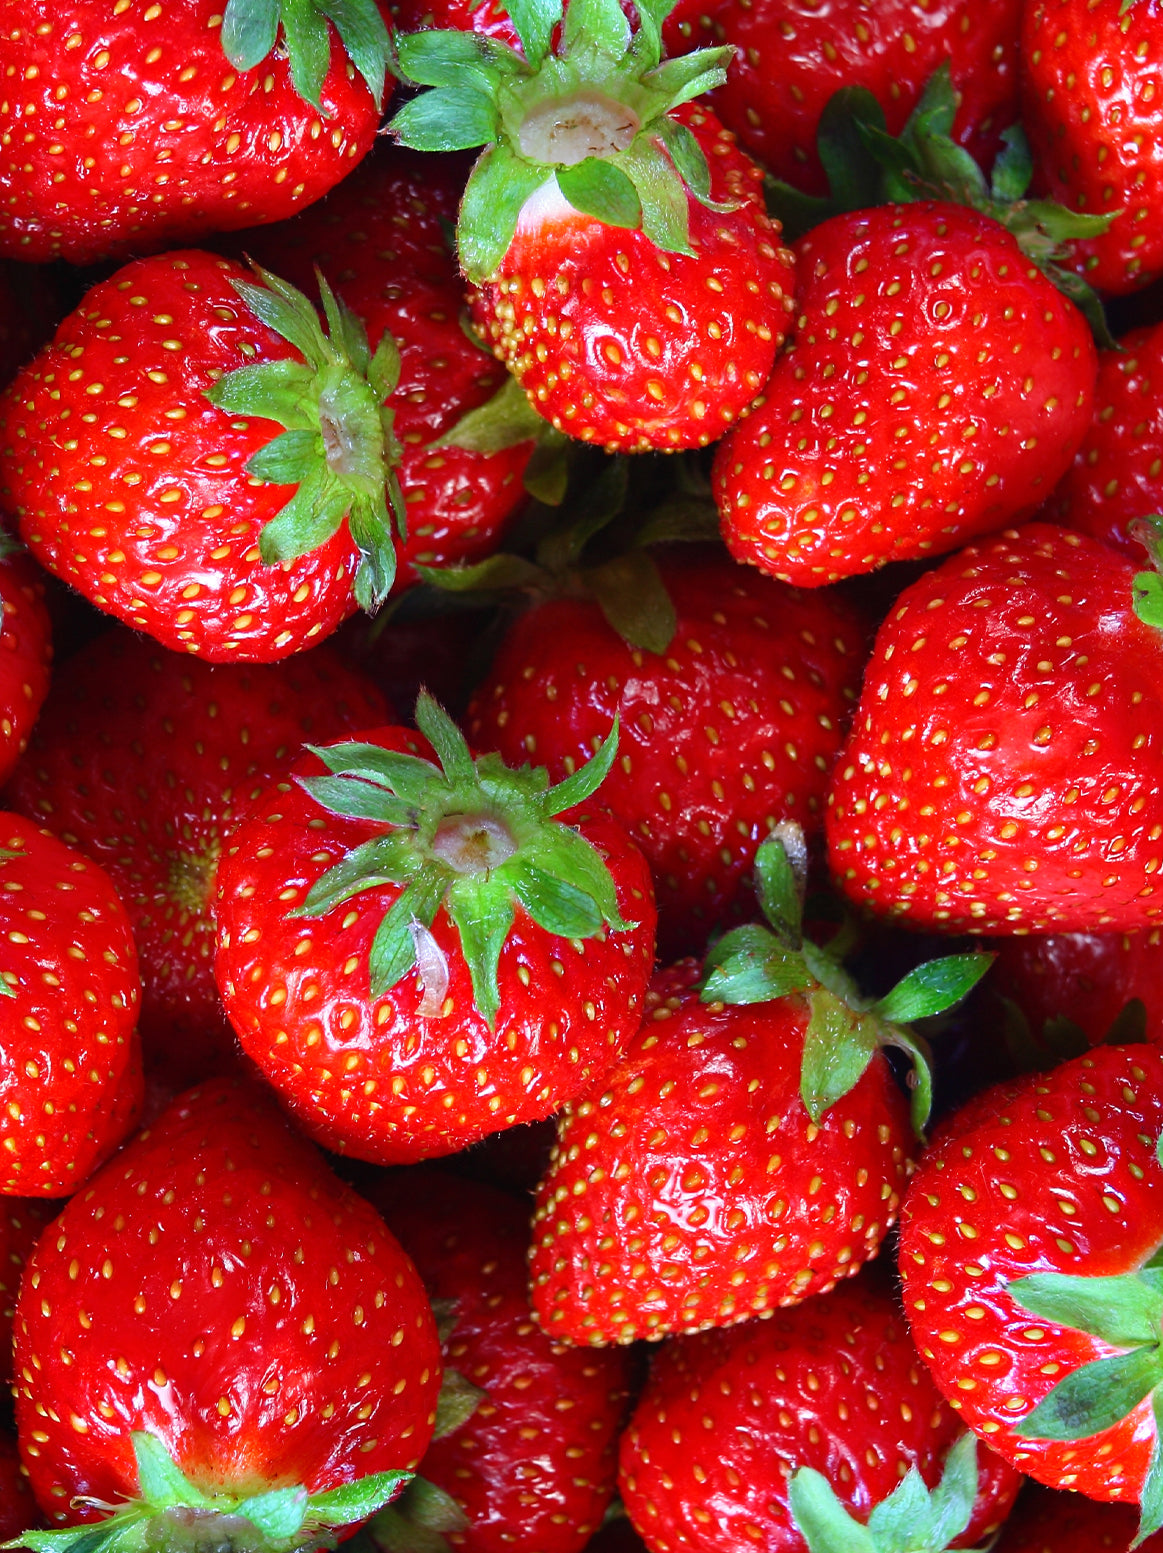 Strawberries - 1 pint